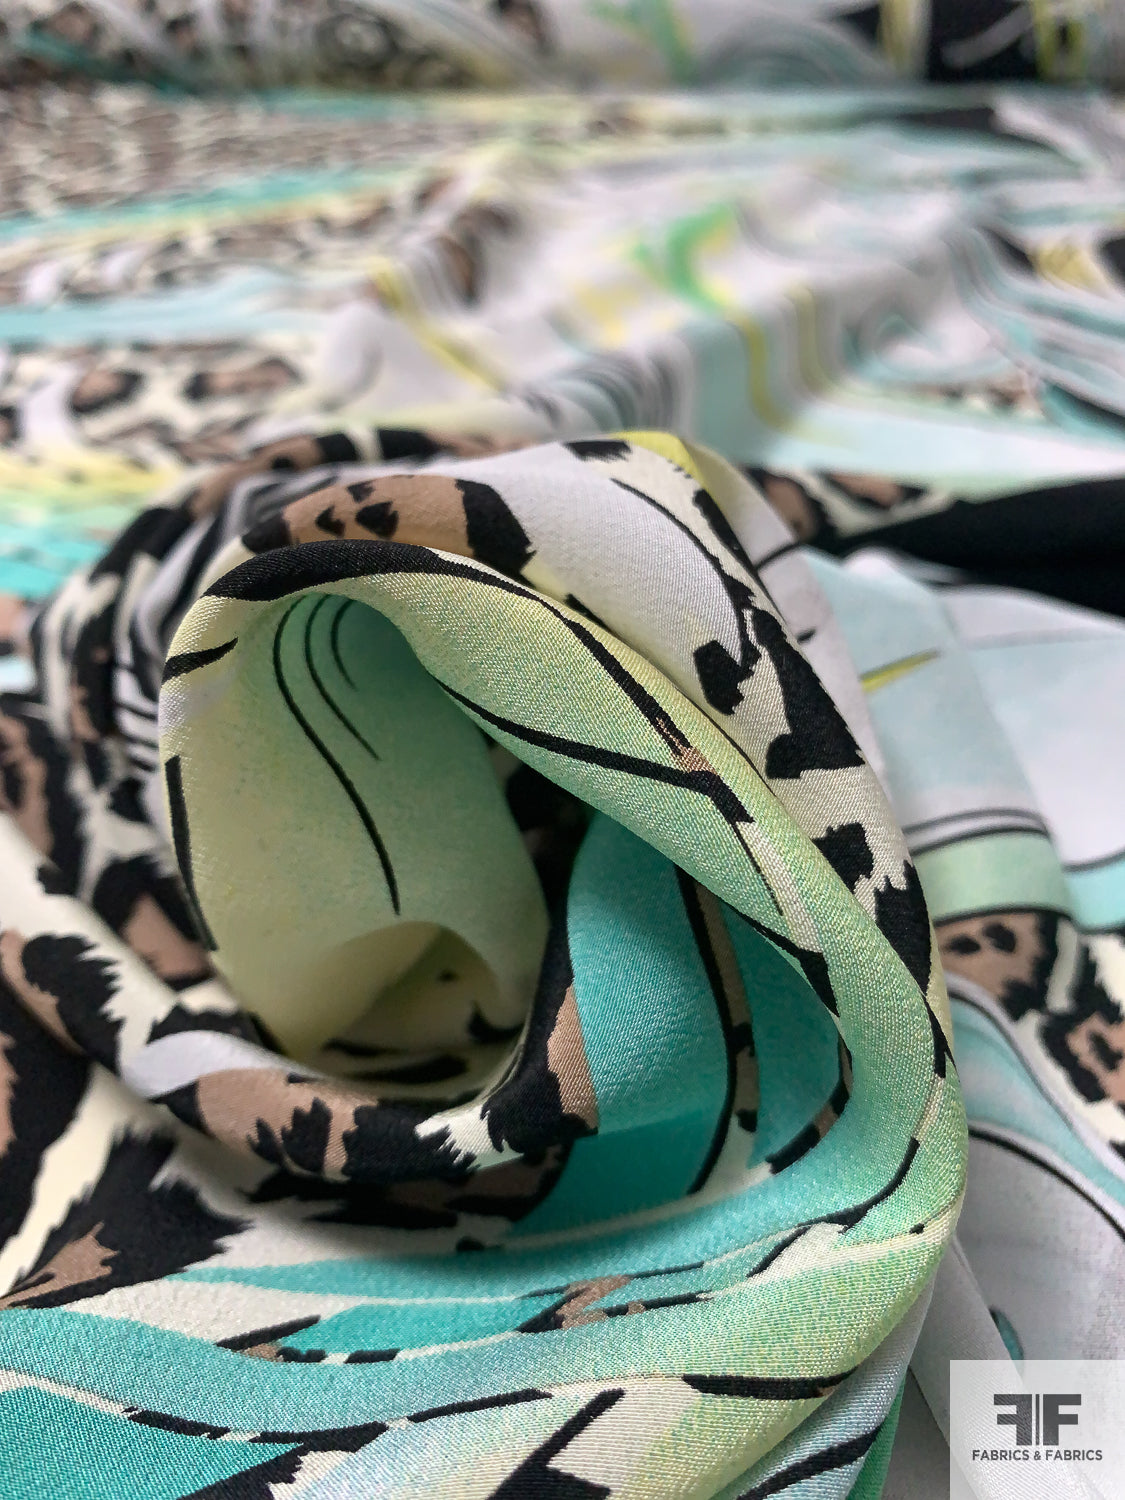 Exotic and Animal Pattern Border Printed Silk Crepe de Chine - Ocean Green / Yellow / Tan / Black / Off-White